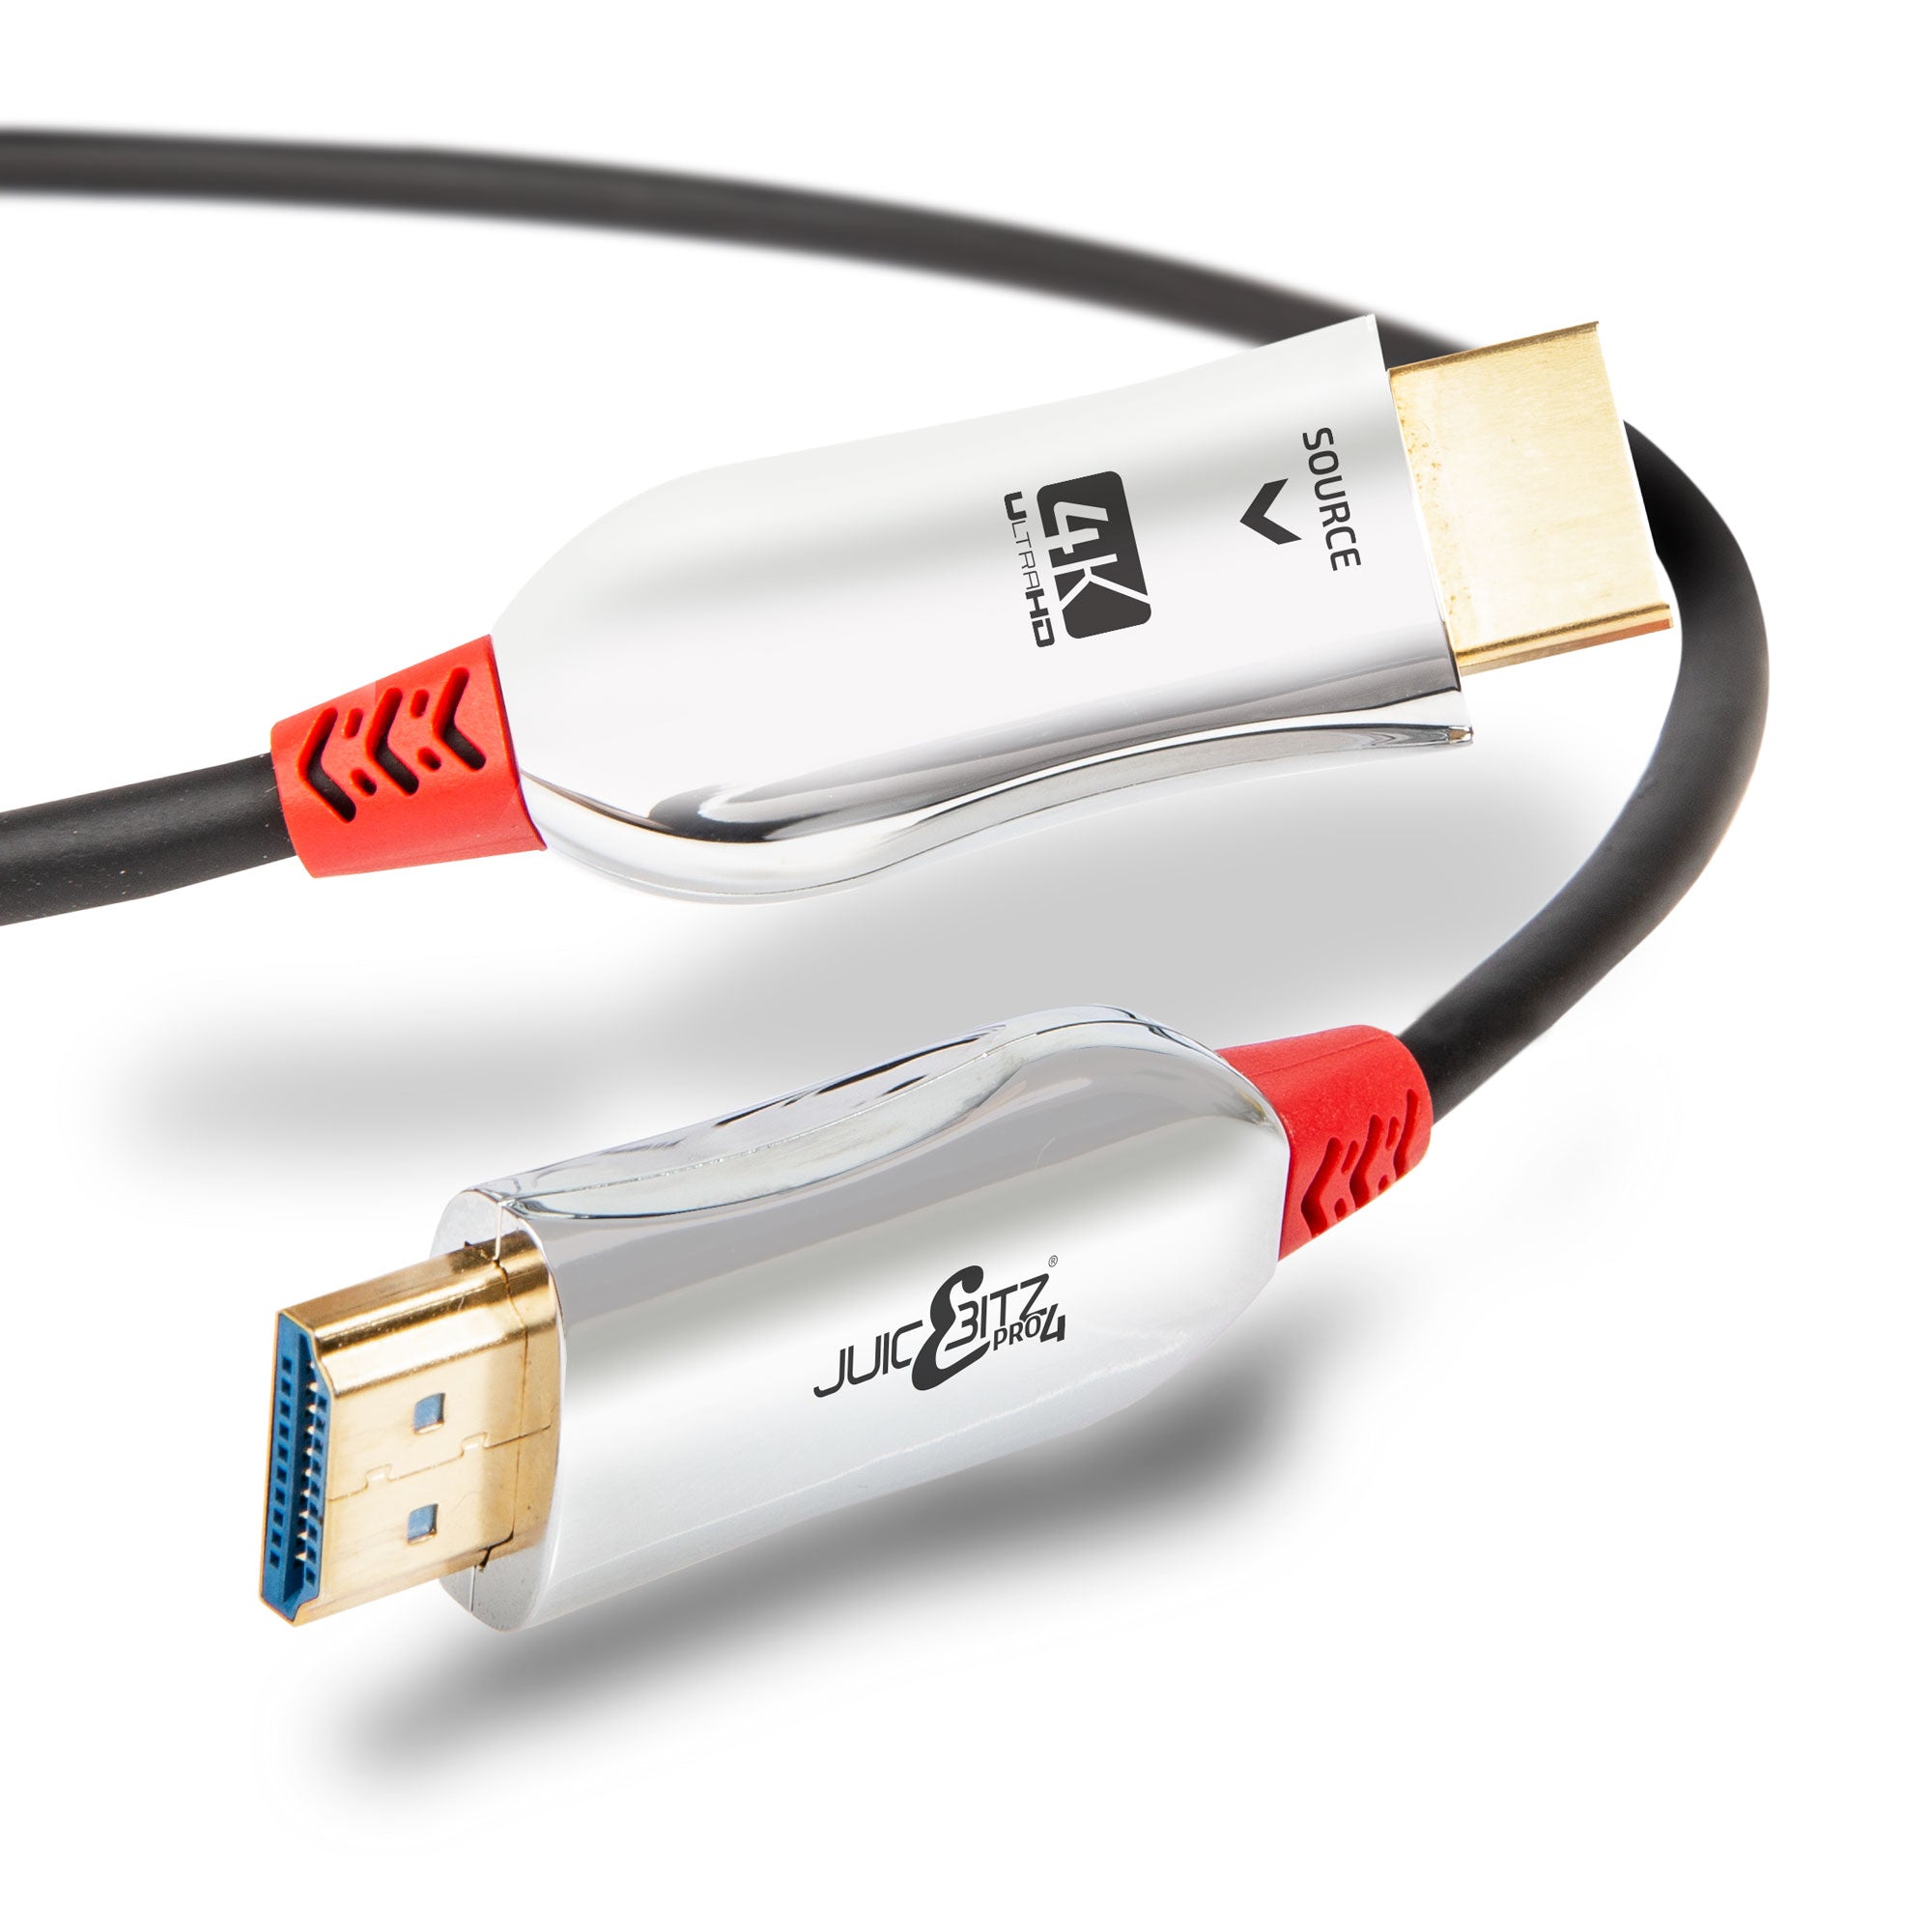 Câble Hdmi plat [8m Lead] Connecteurs TV droits / angulaires Ultra haute  vitesse 18gbps V2.0 prend en charge 4k Hdr 60fps, UHD 2160p / 1080p, Sky Q  + hd, Xbox, Home Th